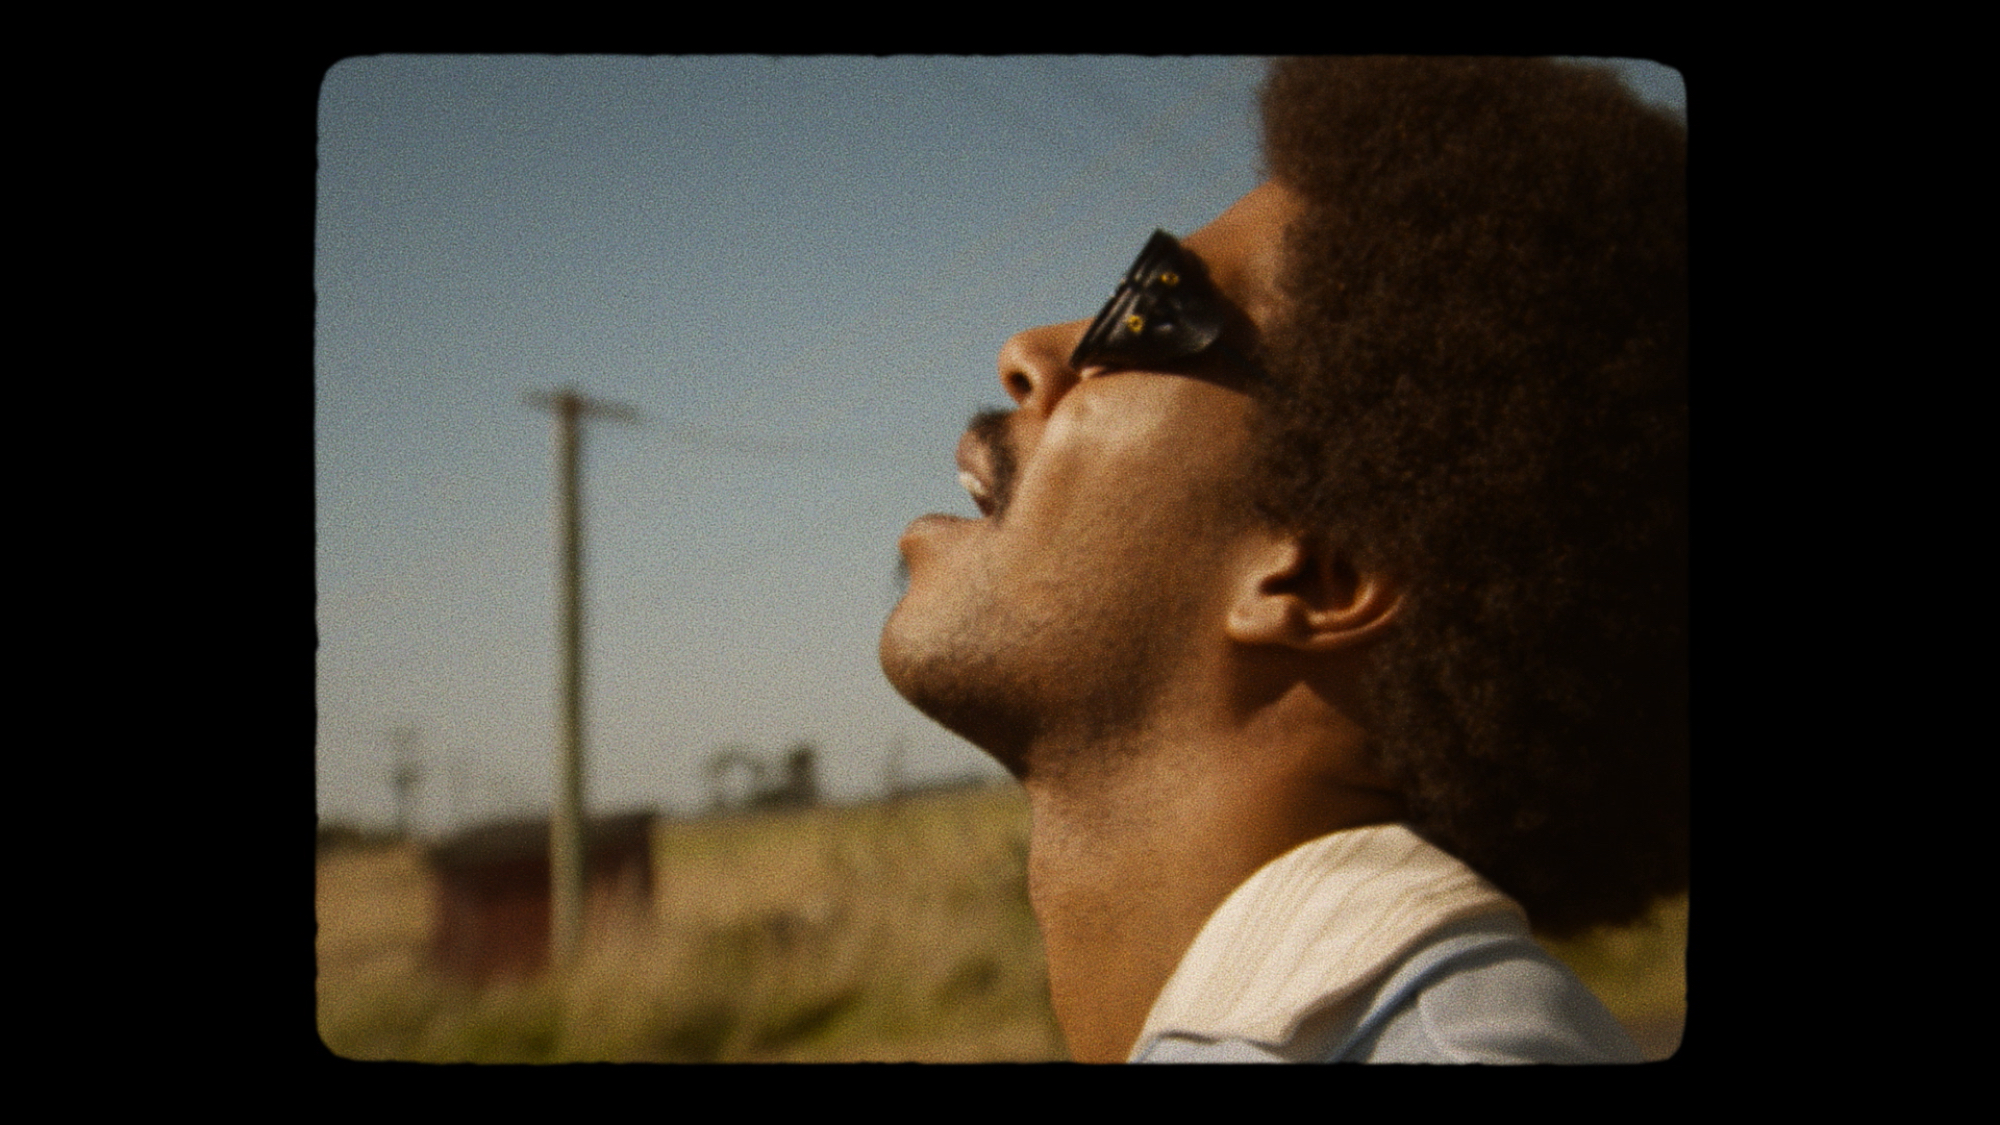 'X' Scott Mescudi as Jackson holding his head back wearing sunglasses